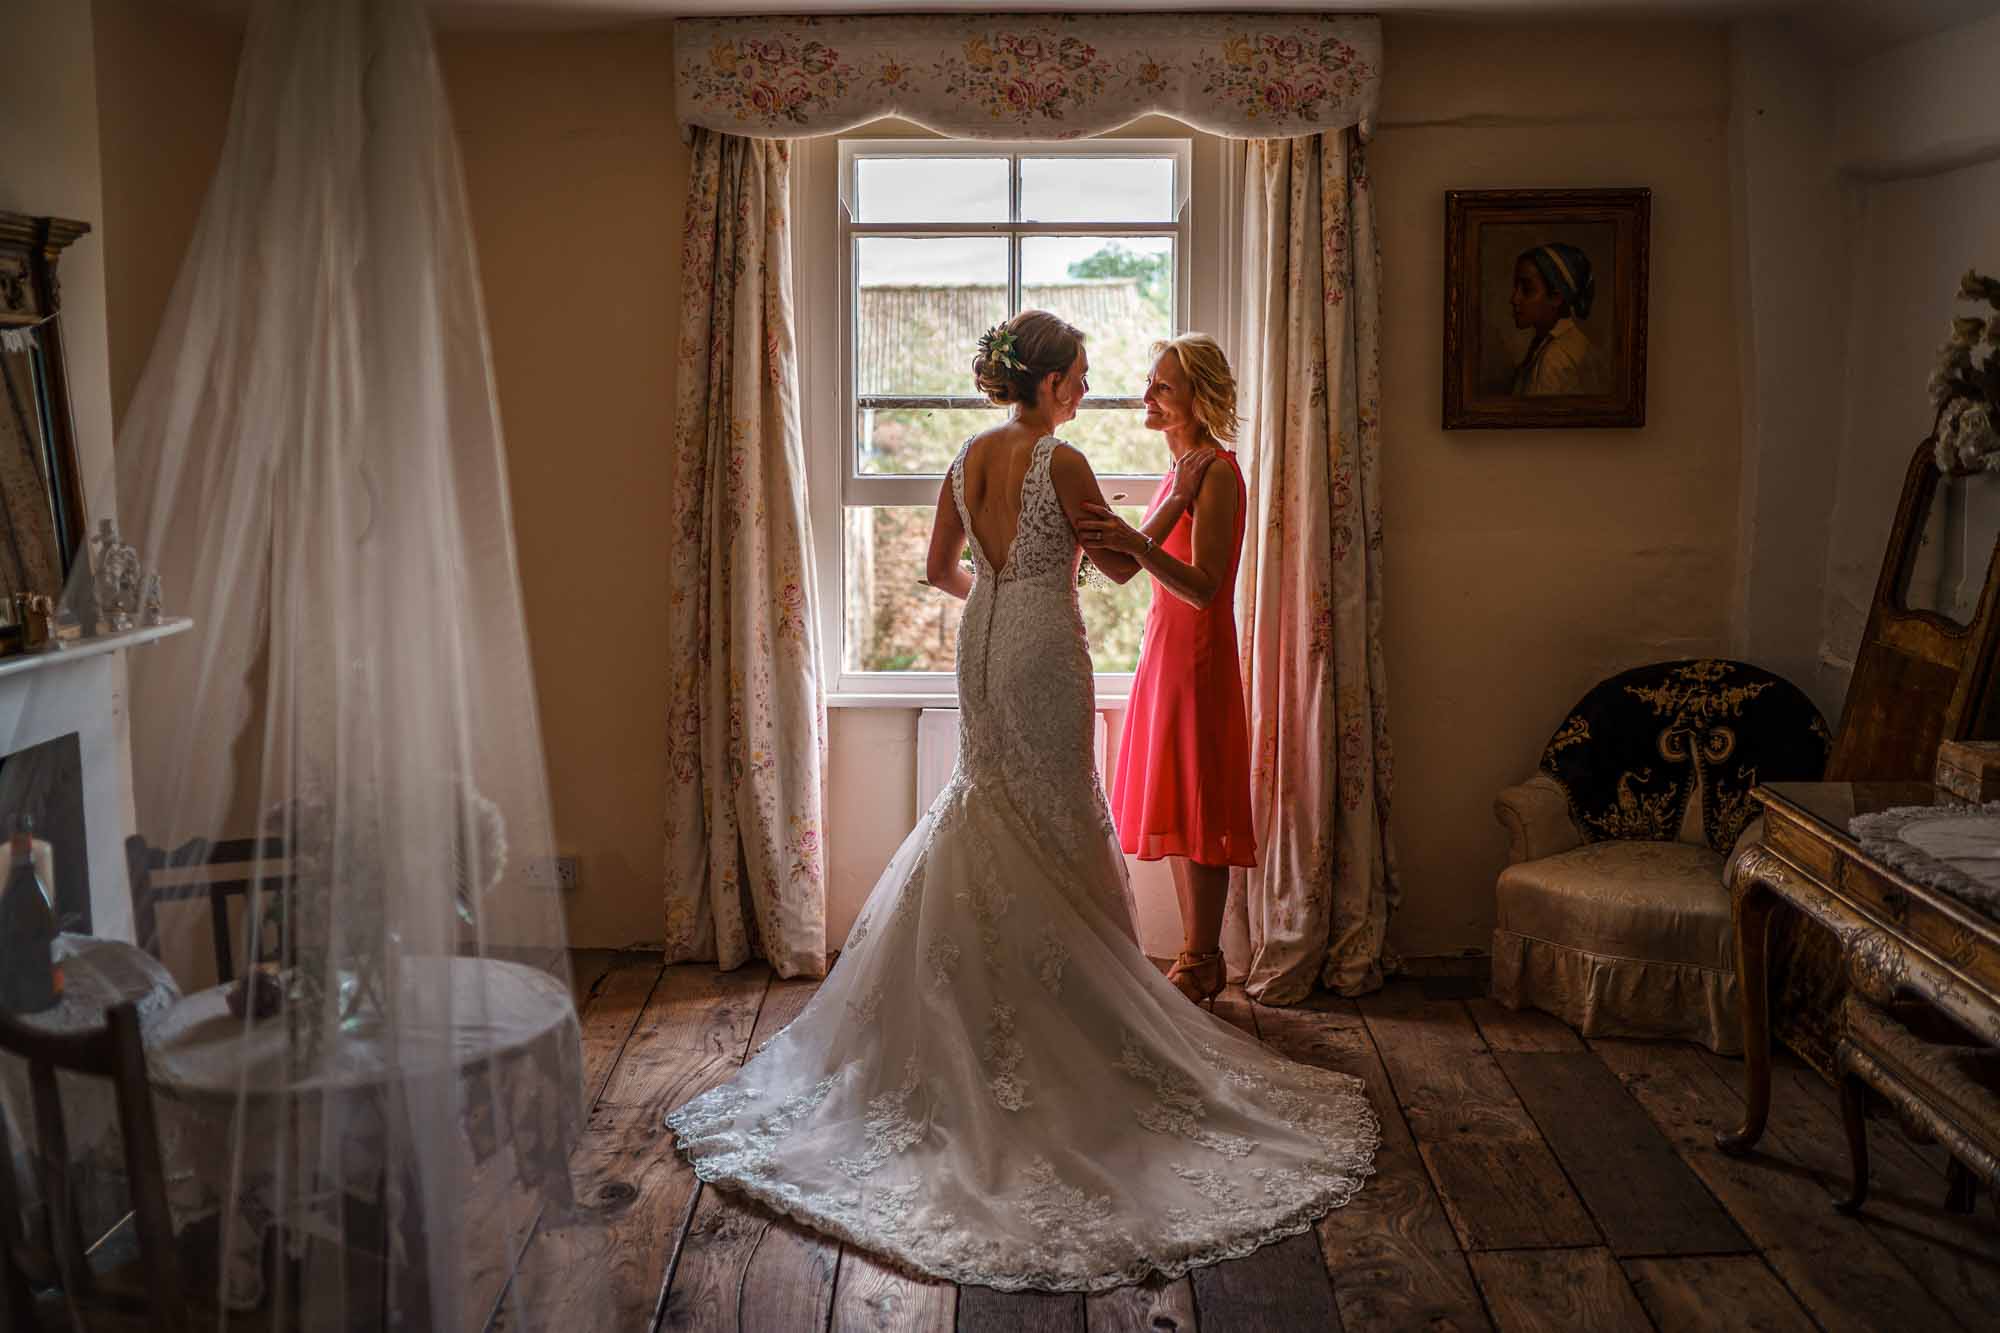 Herefordshire wedding photographer, Wedding Photographer in Herefordshire, West Midlands Wedding Photographer, Best Wedding photography in the west midlands, David Liebst Photography